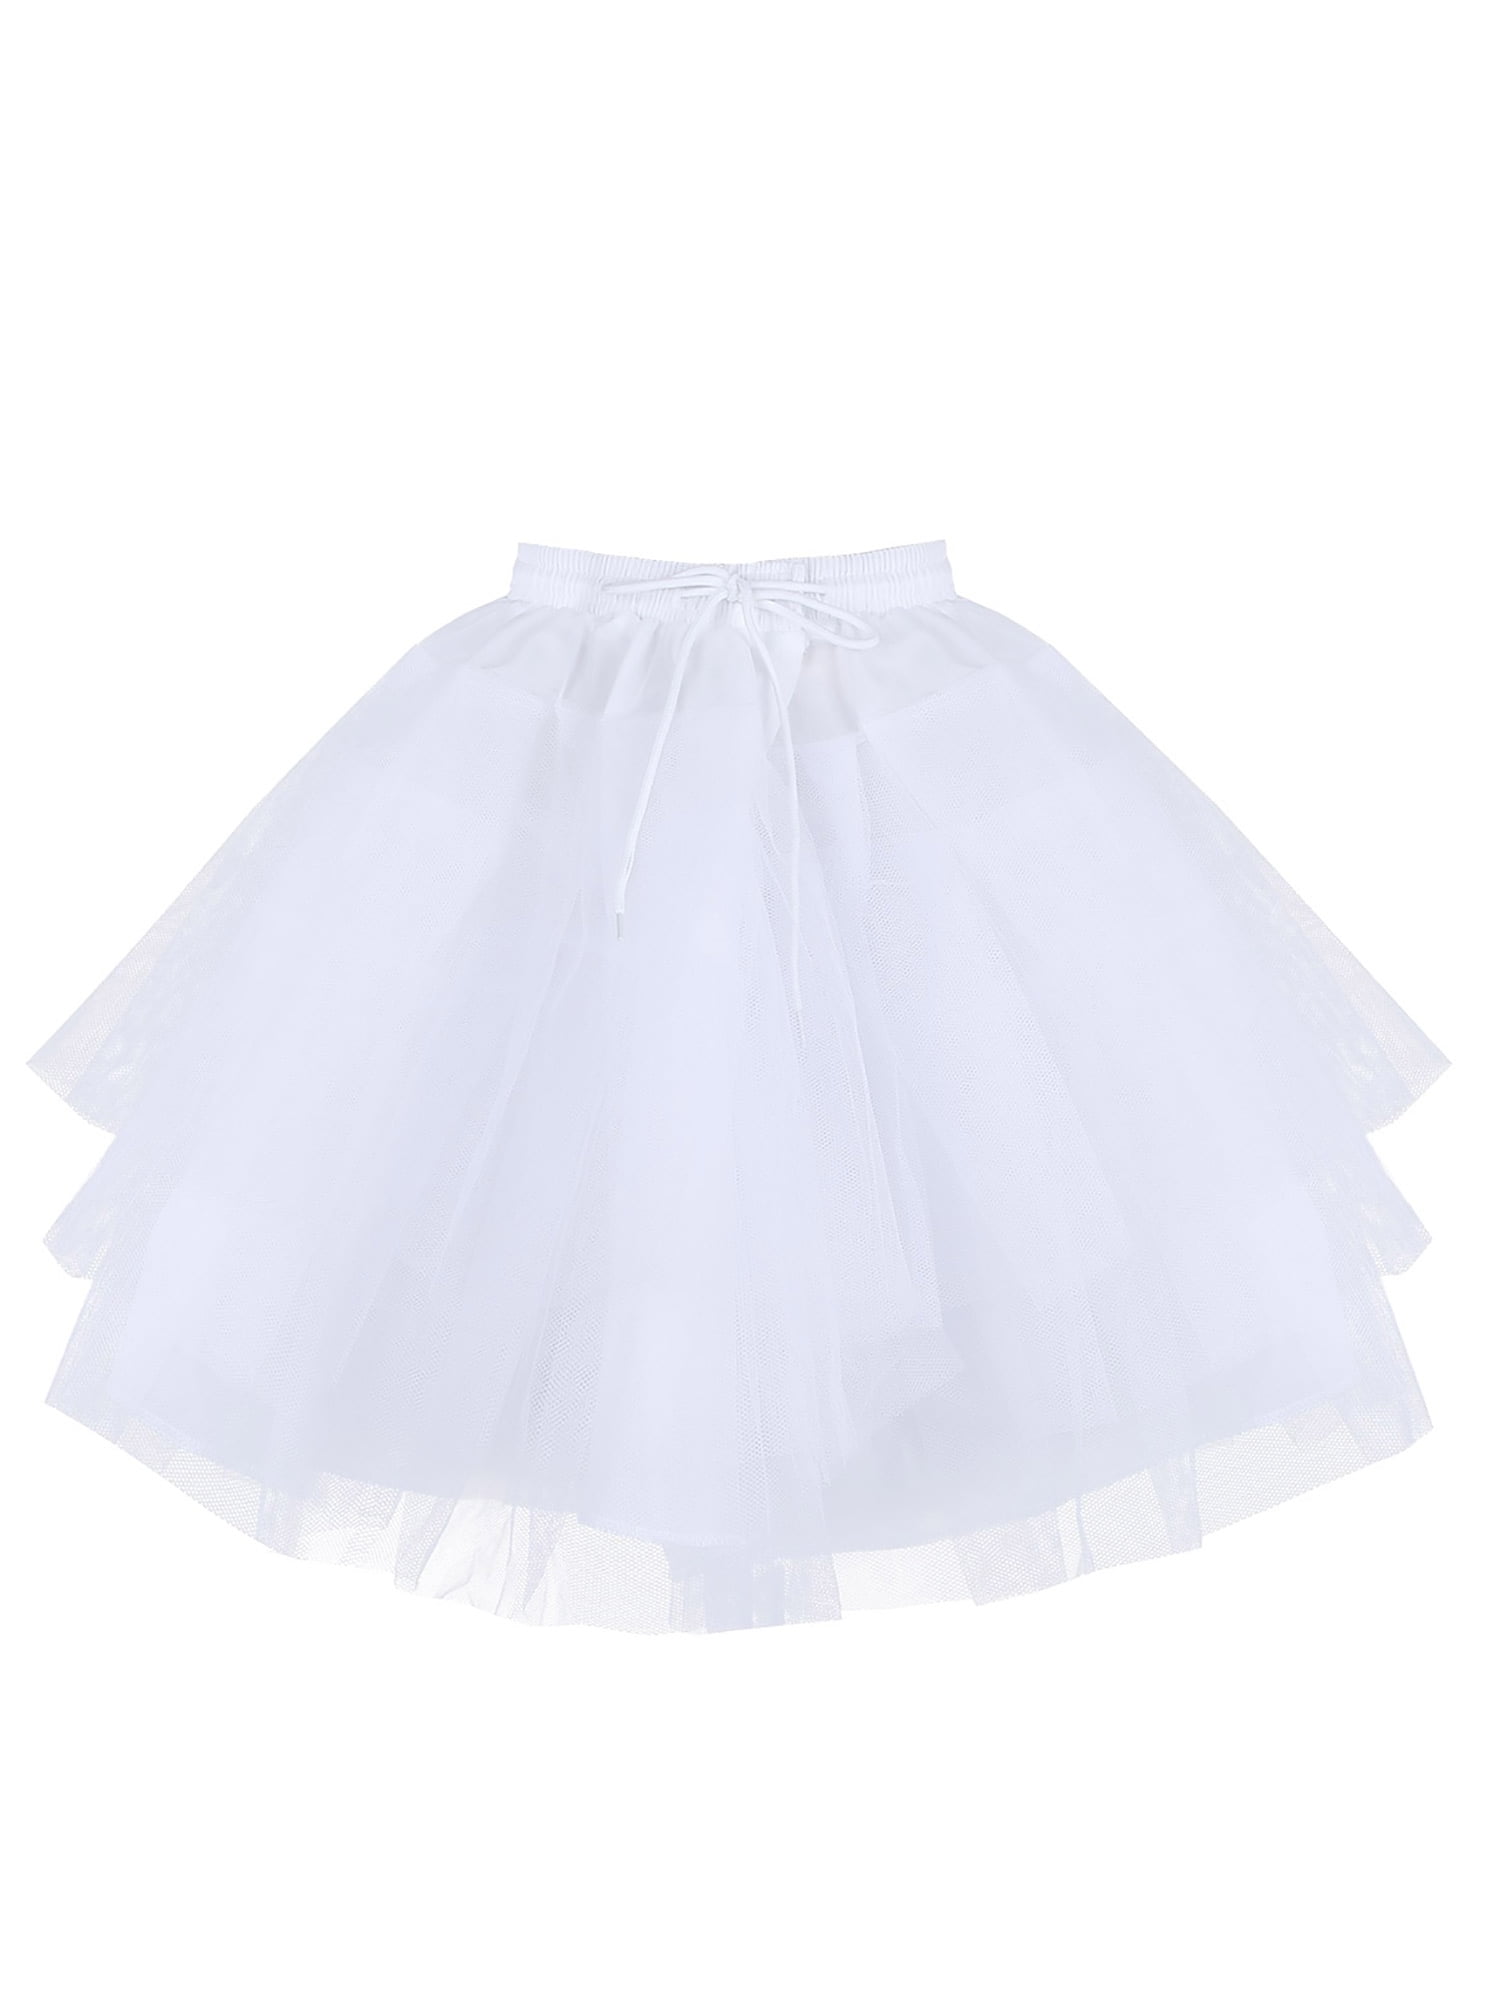 DZdress Kids Puffy Petticoat Ballet Flower Girl Underskirt Crinoline Tutu Skirts White